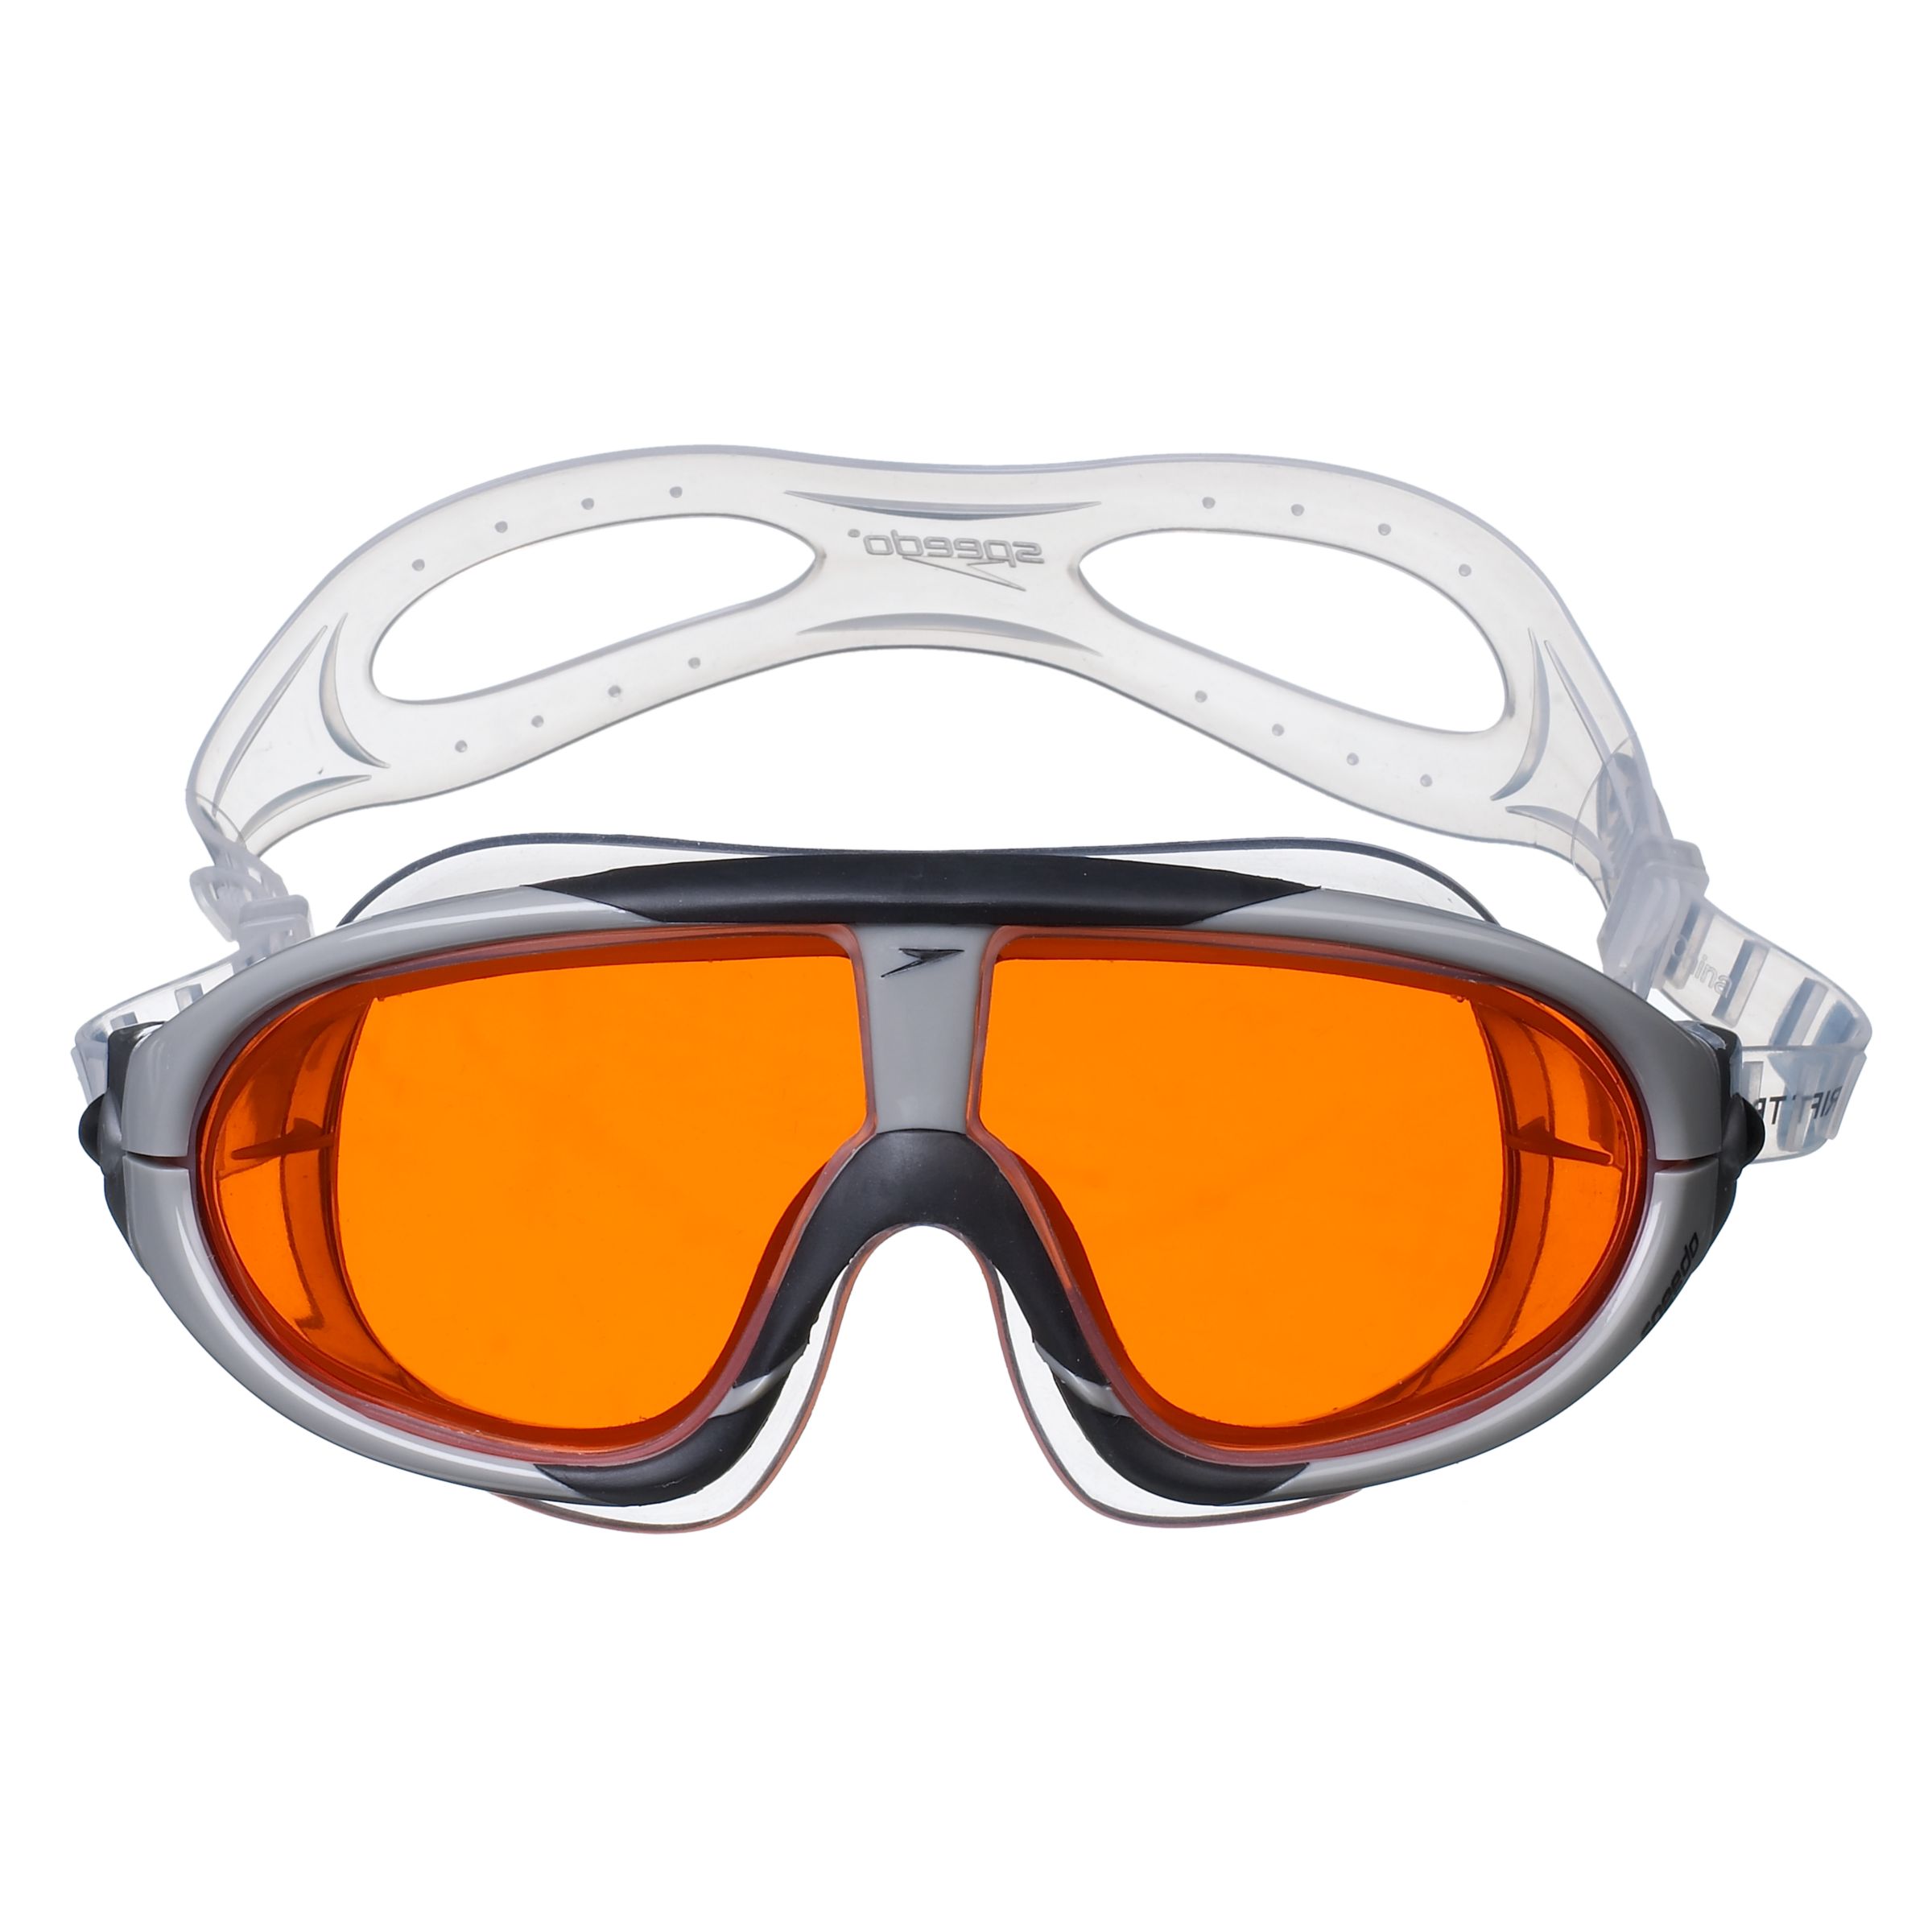 Speedo Rift Tri Power Goggles, Clear/Orange